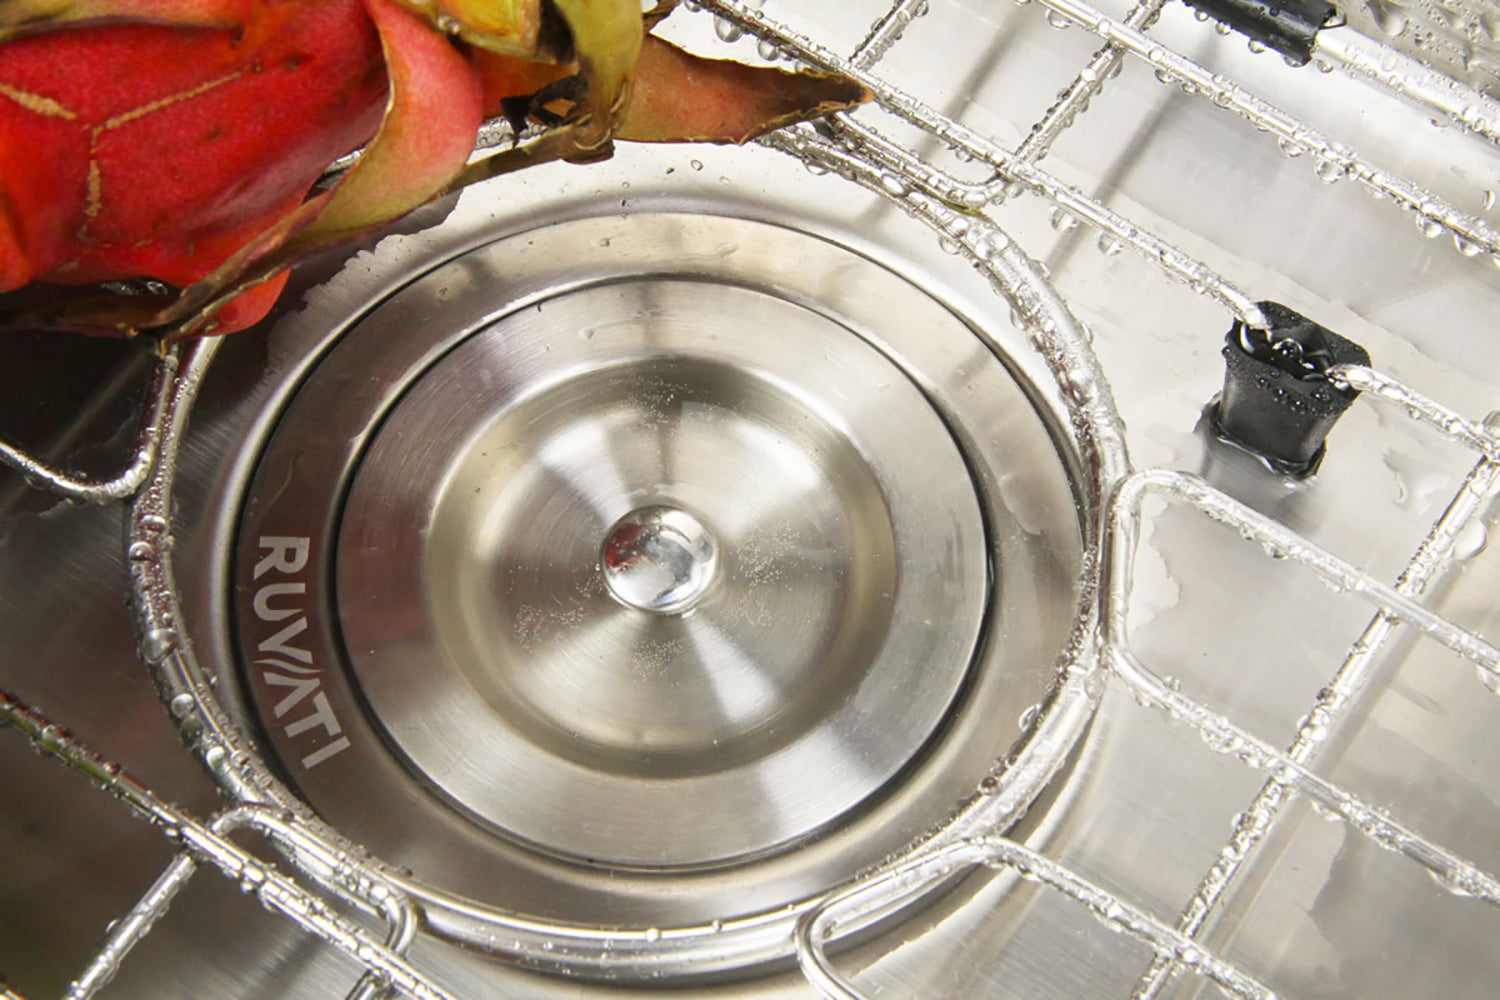 Ruvati Low-Divide Undermount Tight Radius 60/40 Double Bowl 16 Gauge Stainless Steel Kitchen Sink